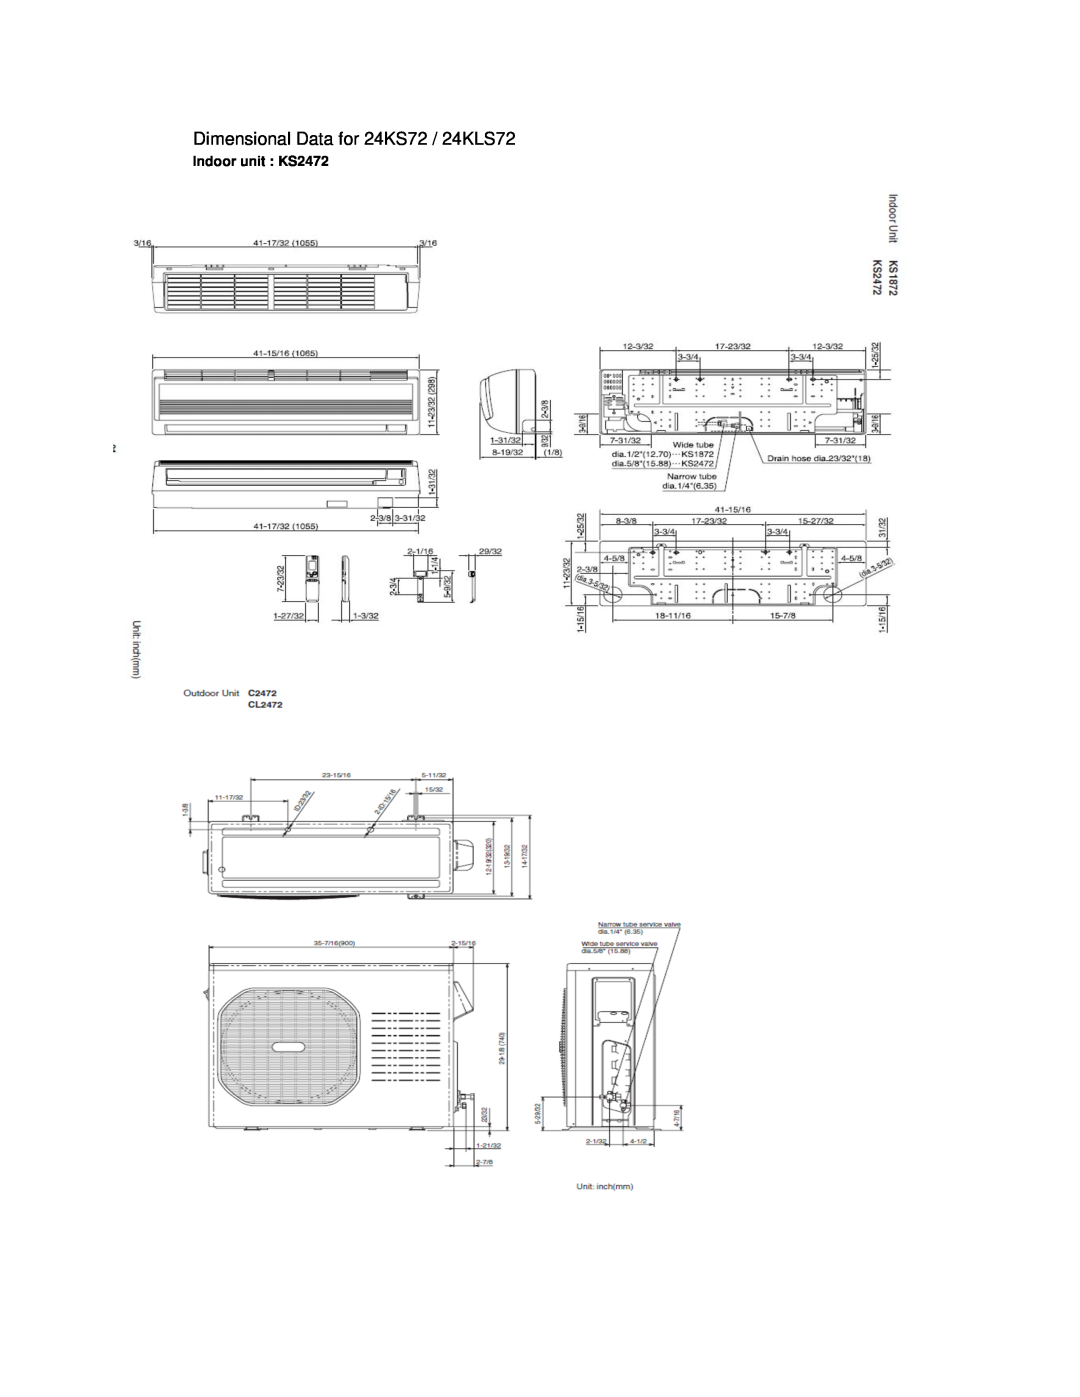 Sanyo manual Dimensional Data for 24KS72 / 24KLS72, Indoor unit KS2472 